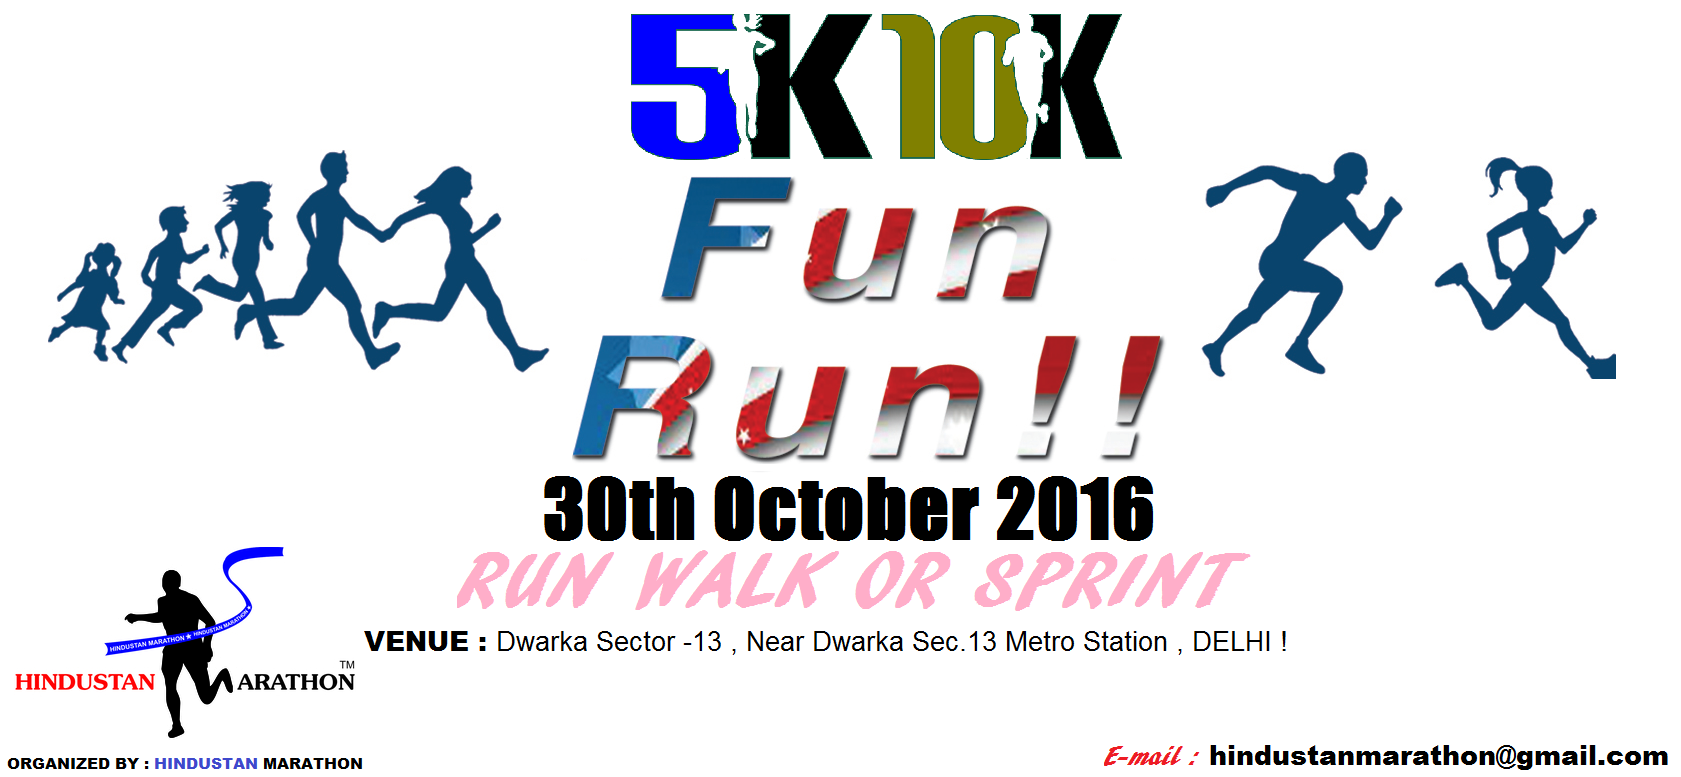 FREE 'Sugar camp' at Fun Run marathon organised by Hindustan Marathon